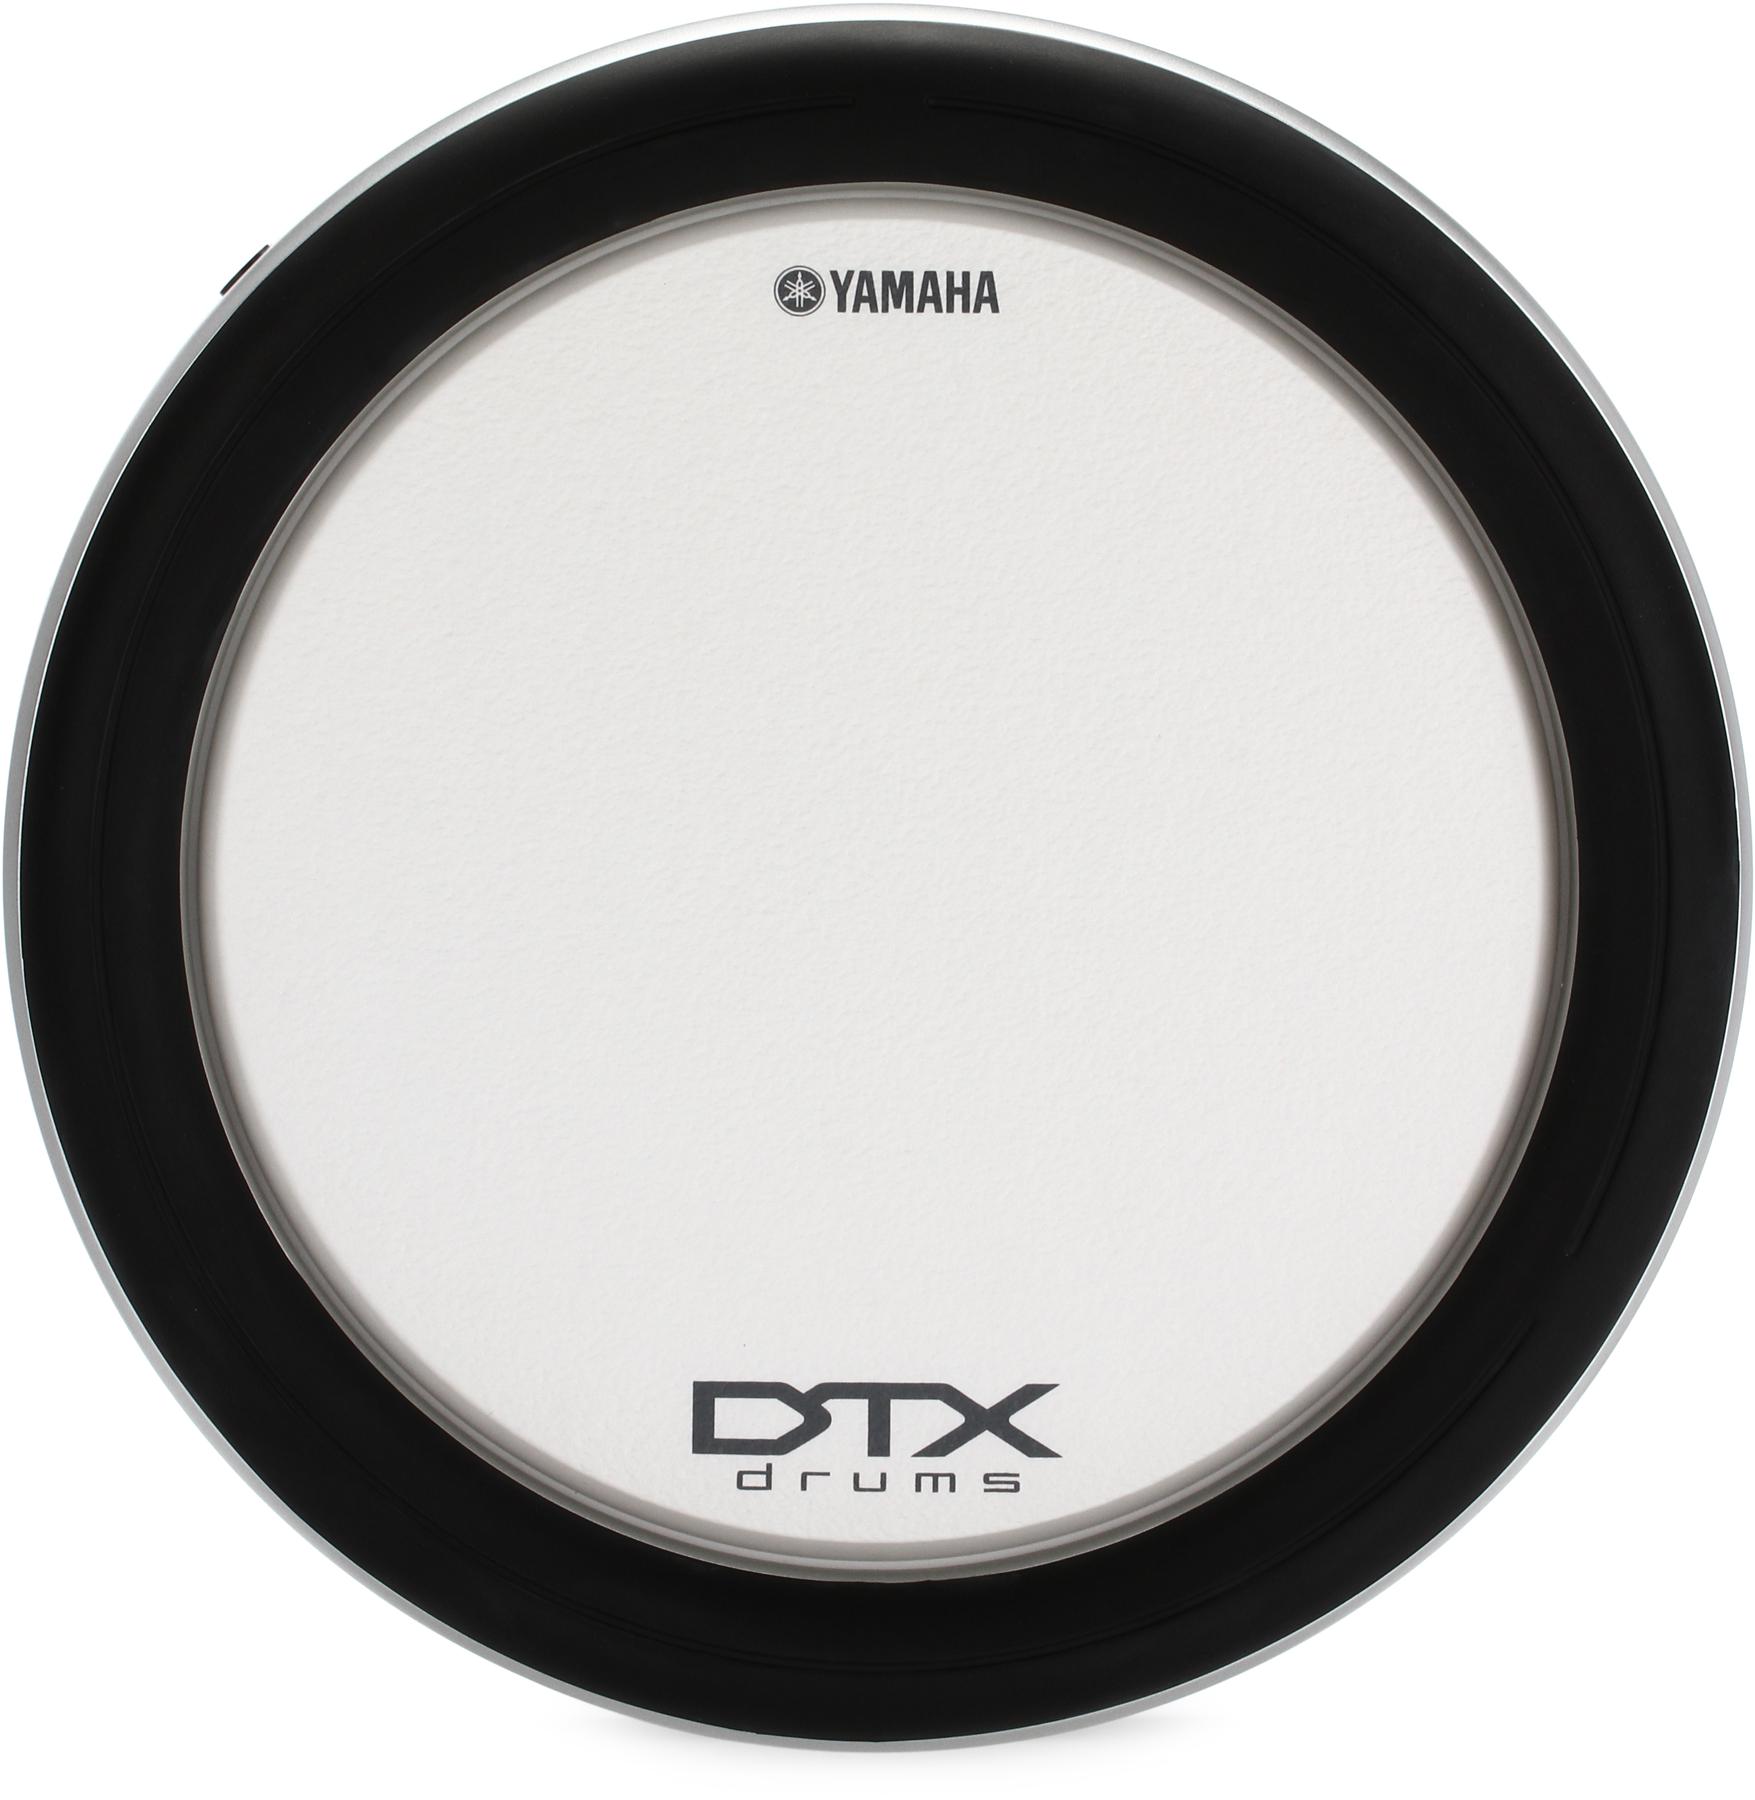 4. Yamaha DTX XP80 3-Zone 8" Drum Pad